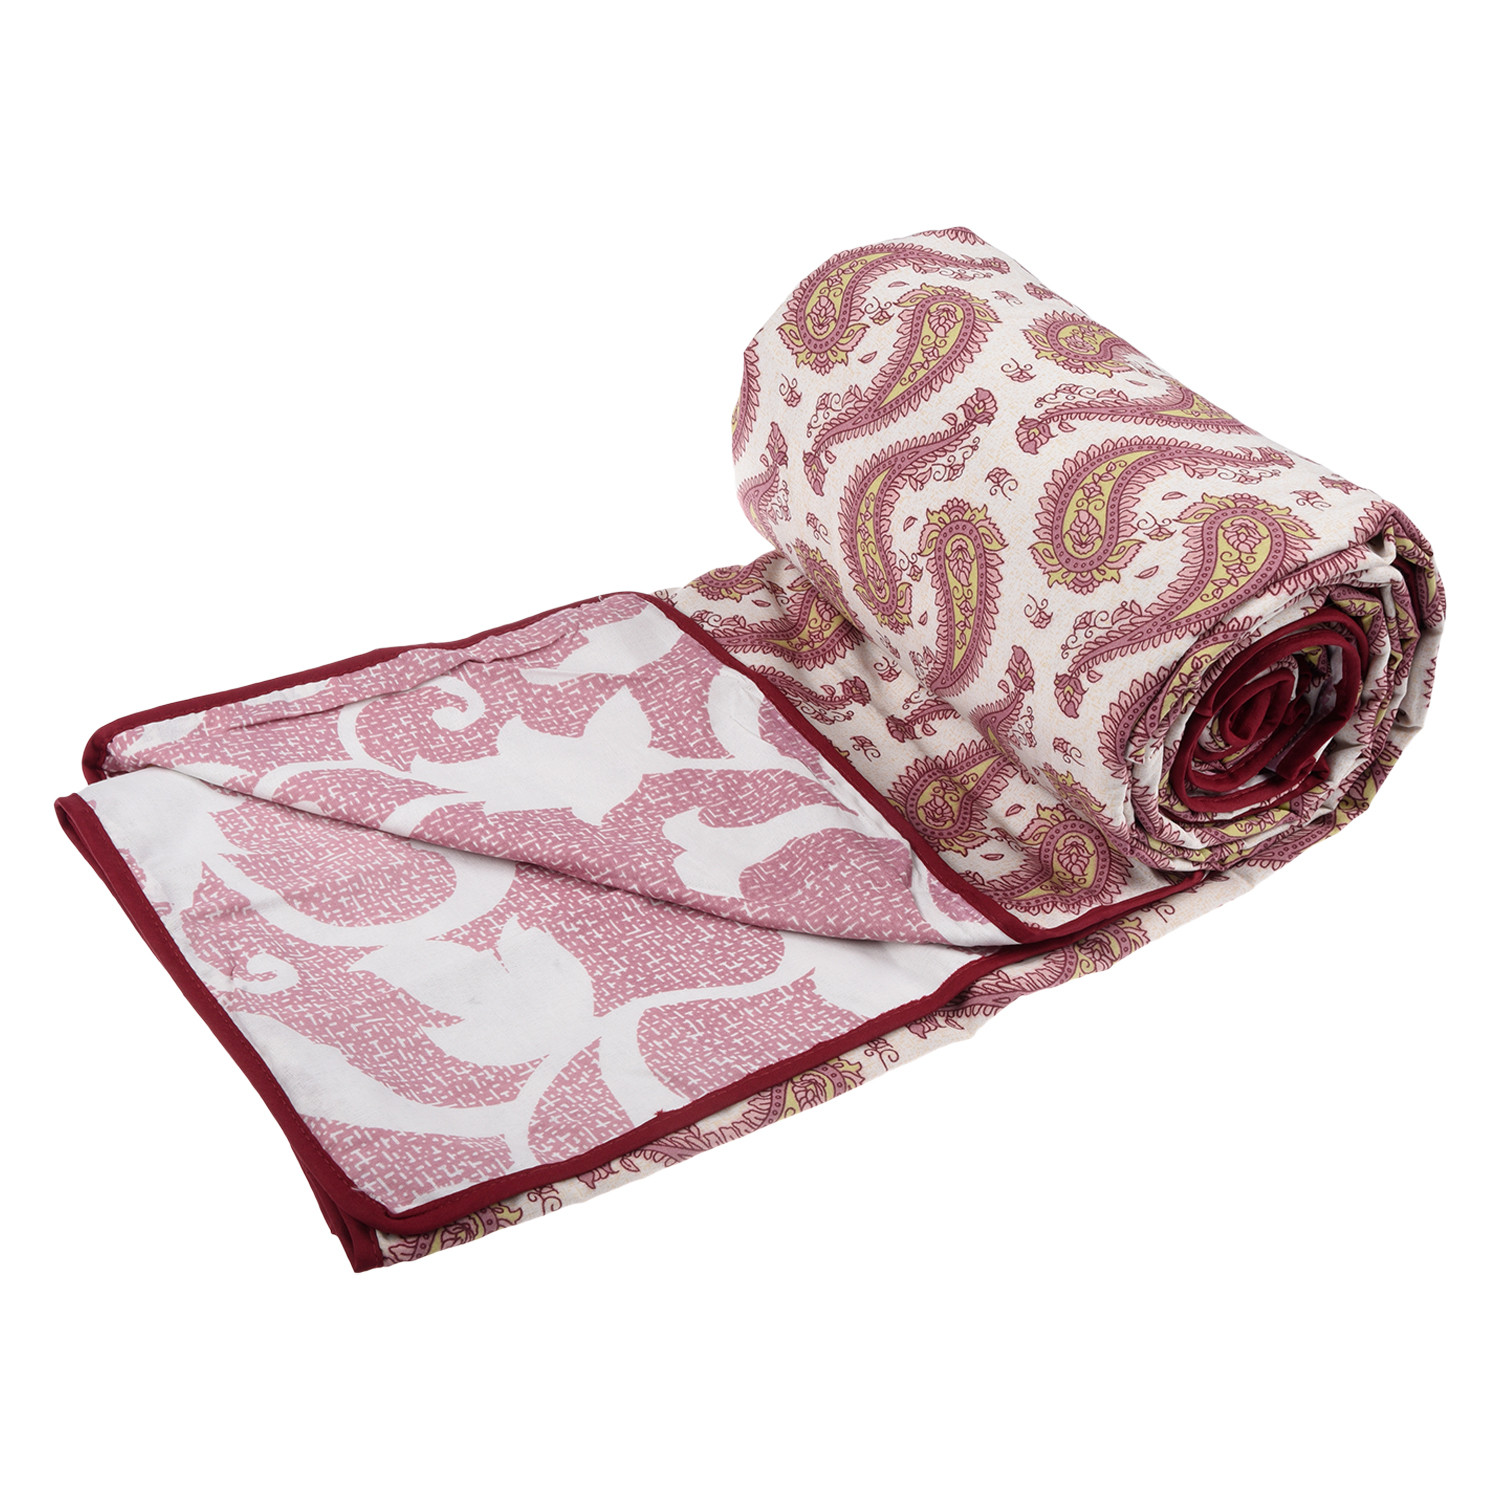 Kuber Industries Blanket | Cotton Double Bed Dohar | Blanket For Home | Reversible AC Blanket For Travelling | Blanket For Summer | Blanket For Winters | Carry Print | Pink